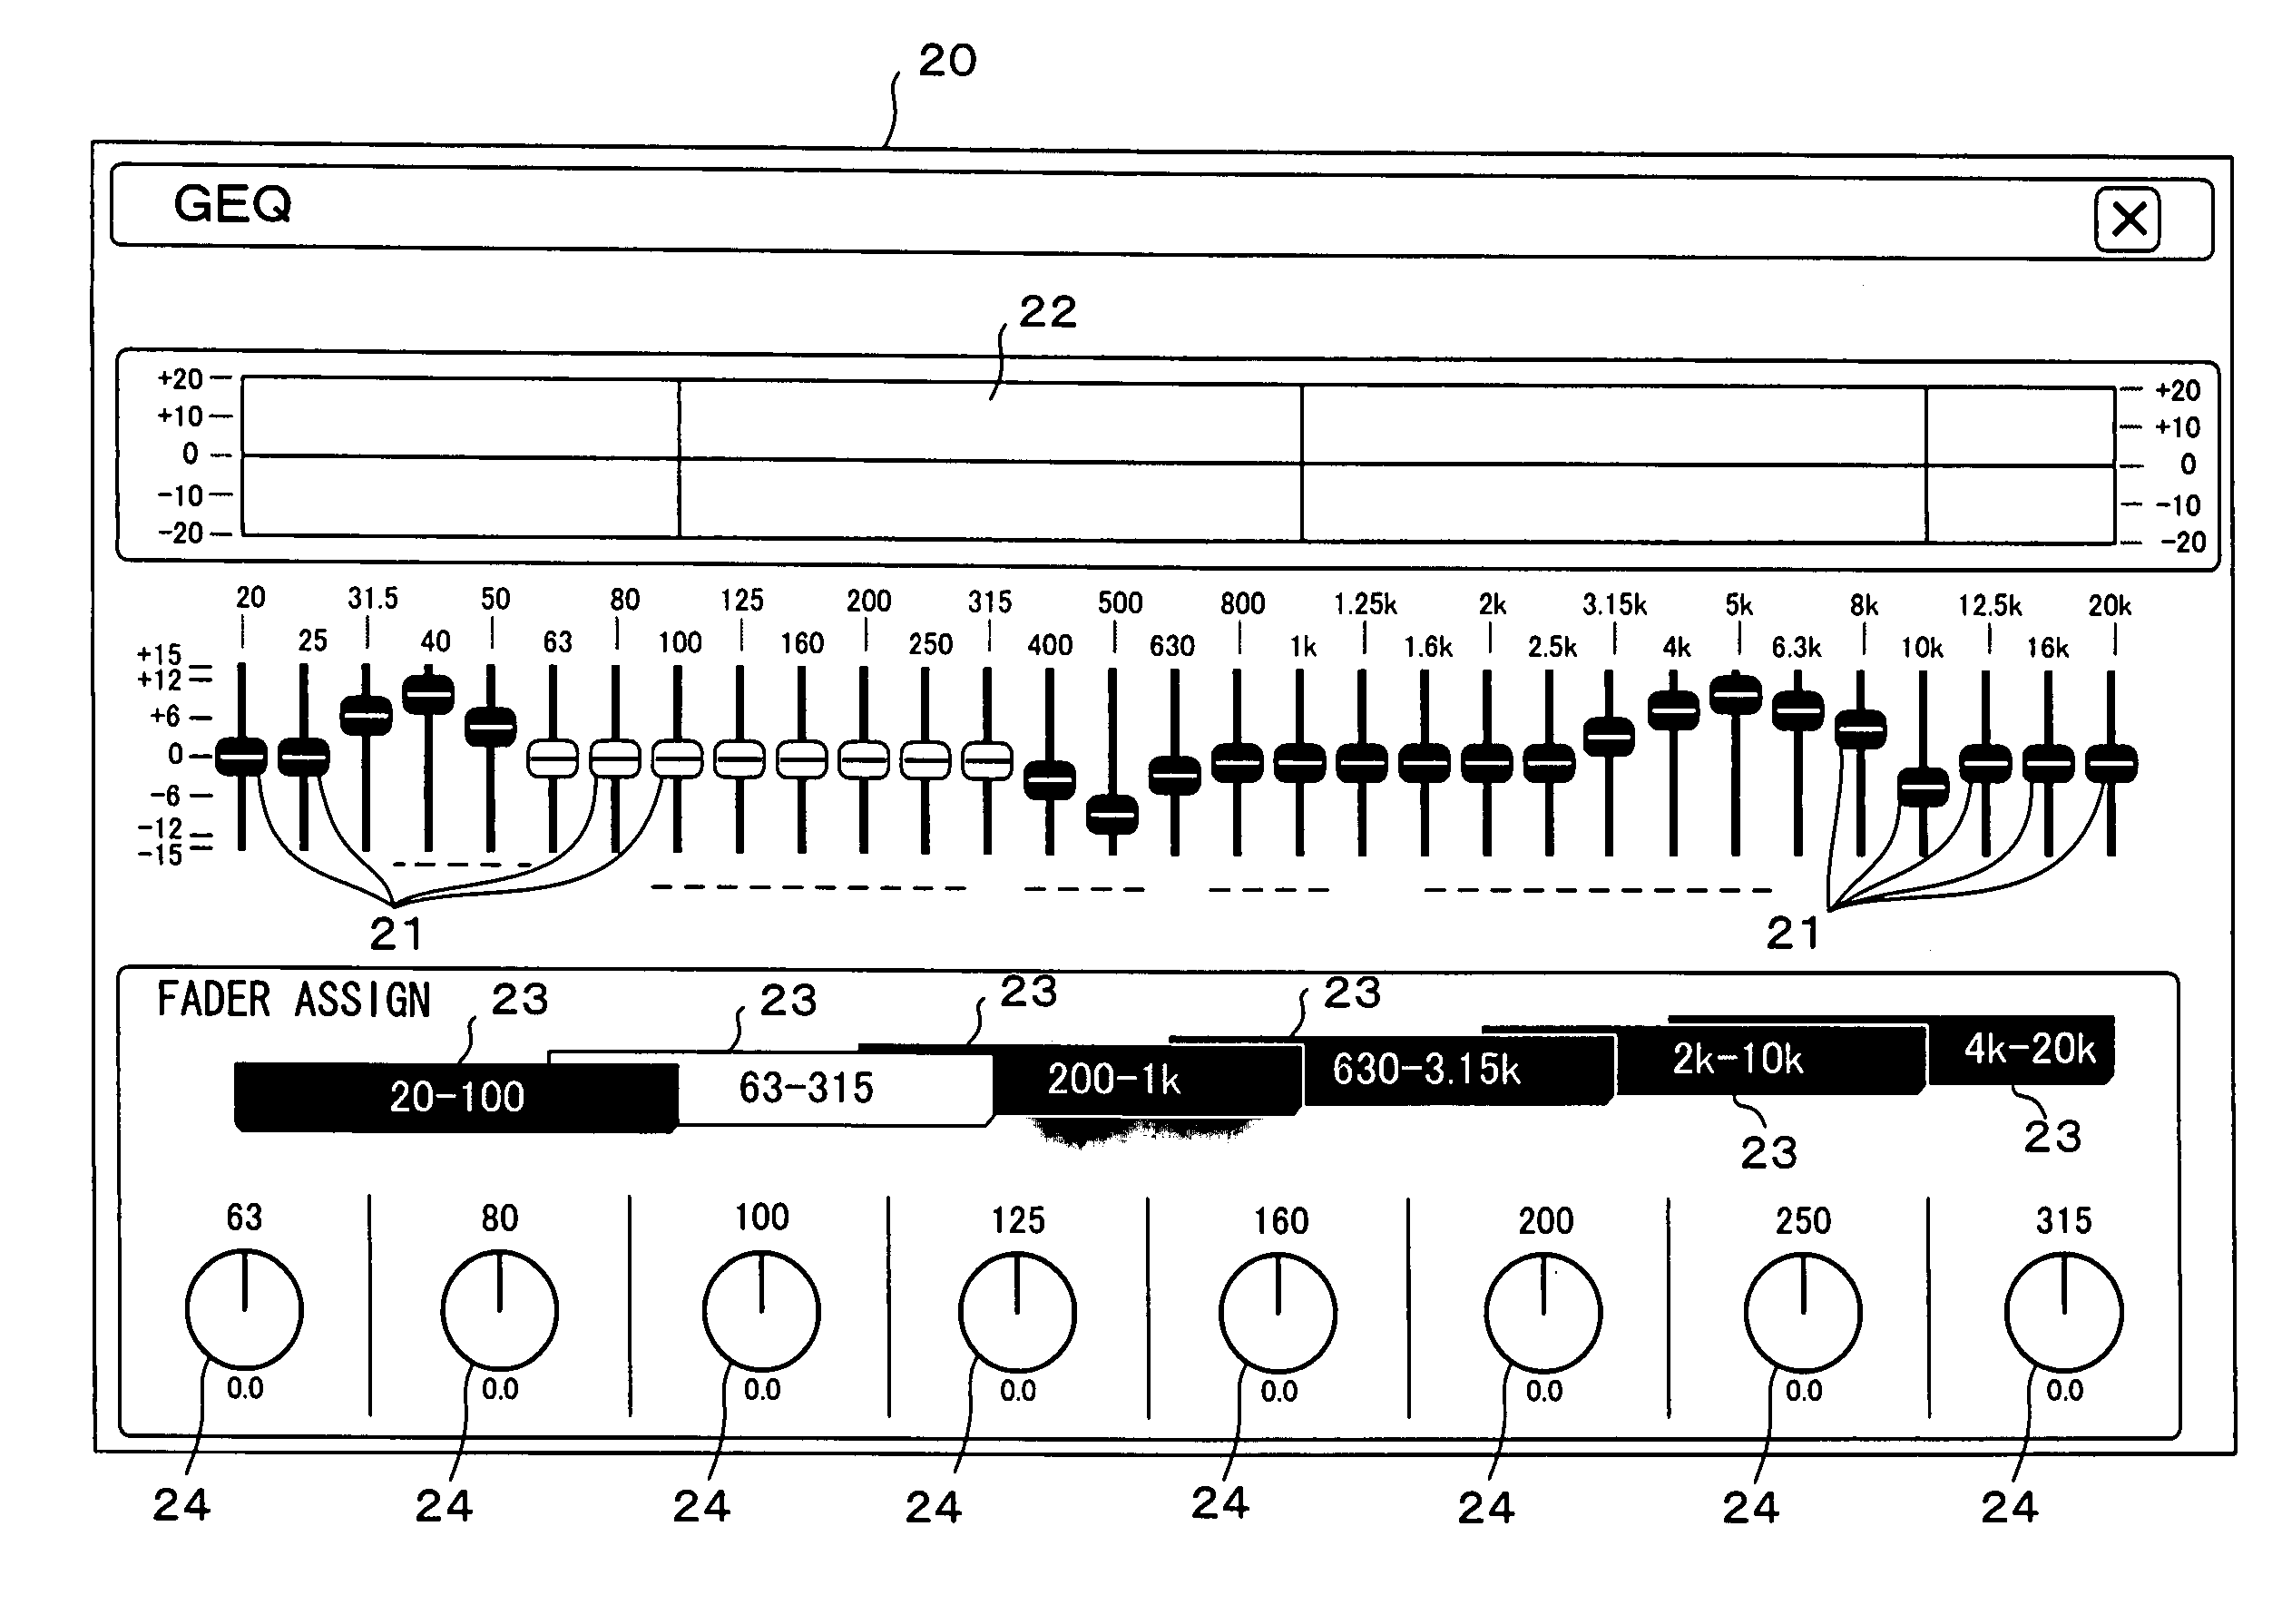 Parameter setting apparatus and method for audio mixer